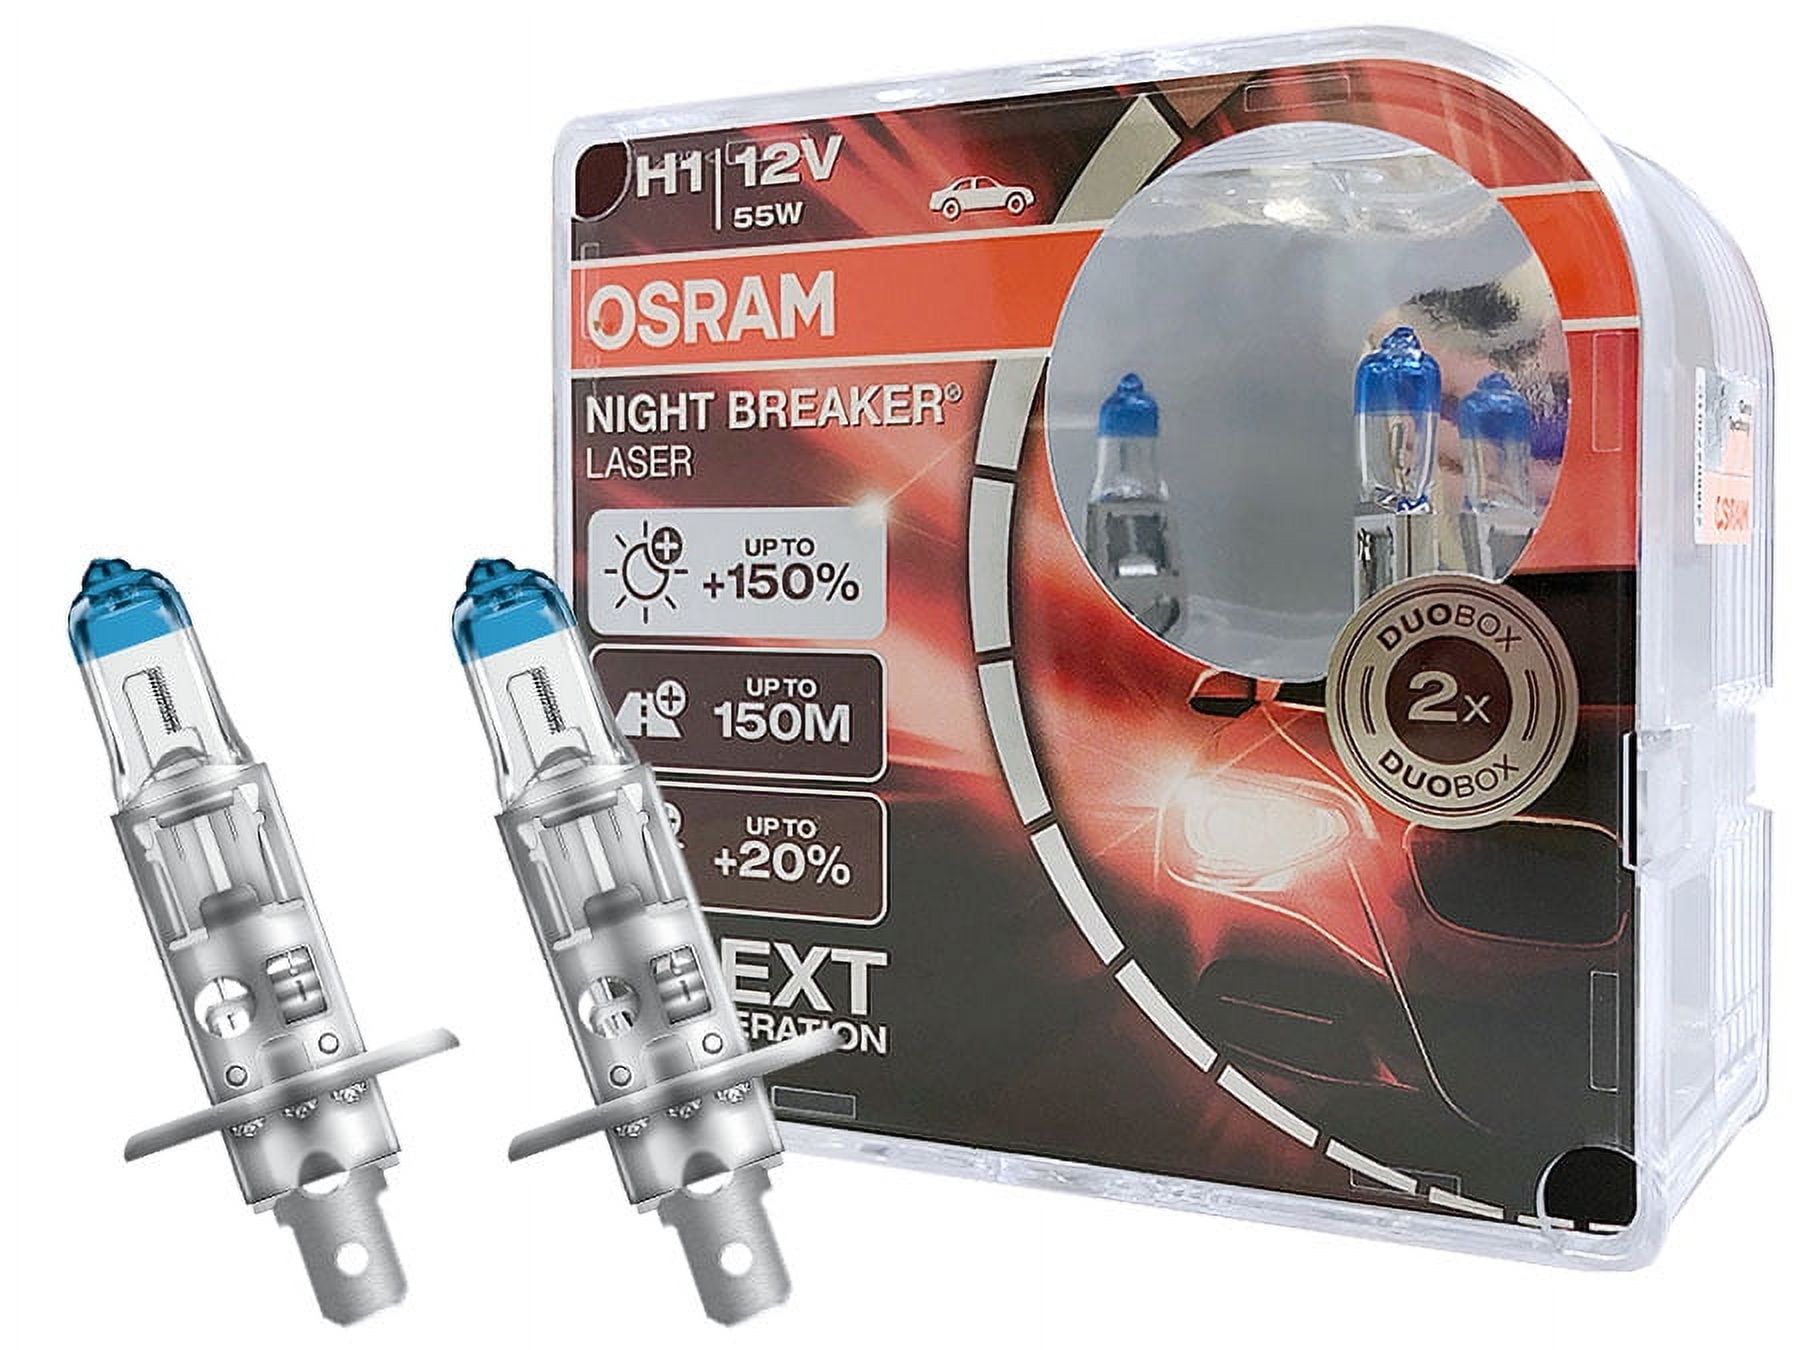 Osram next generation Night Breaker Laser H1 : : Automotive